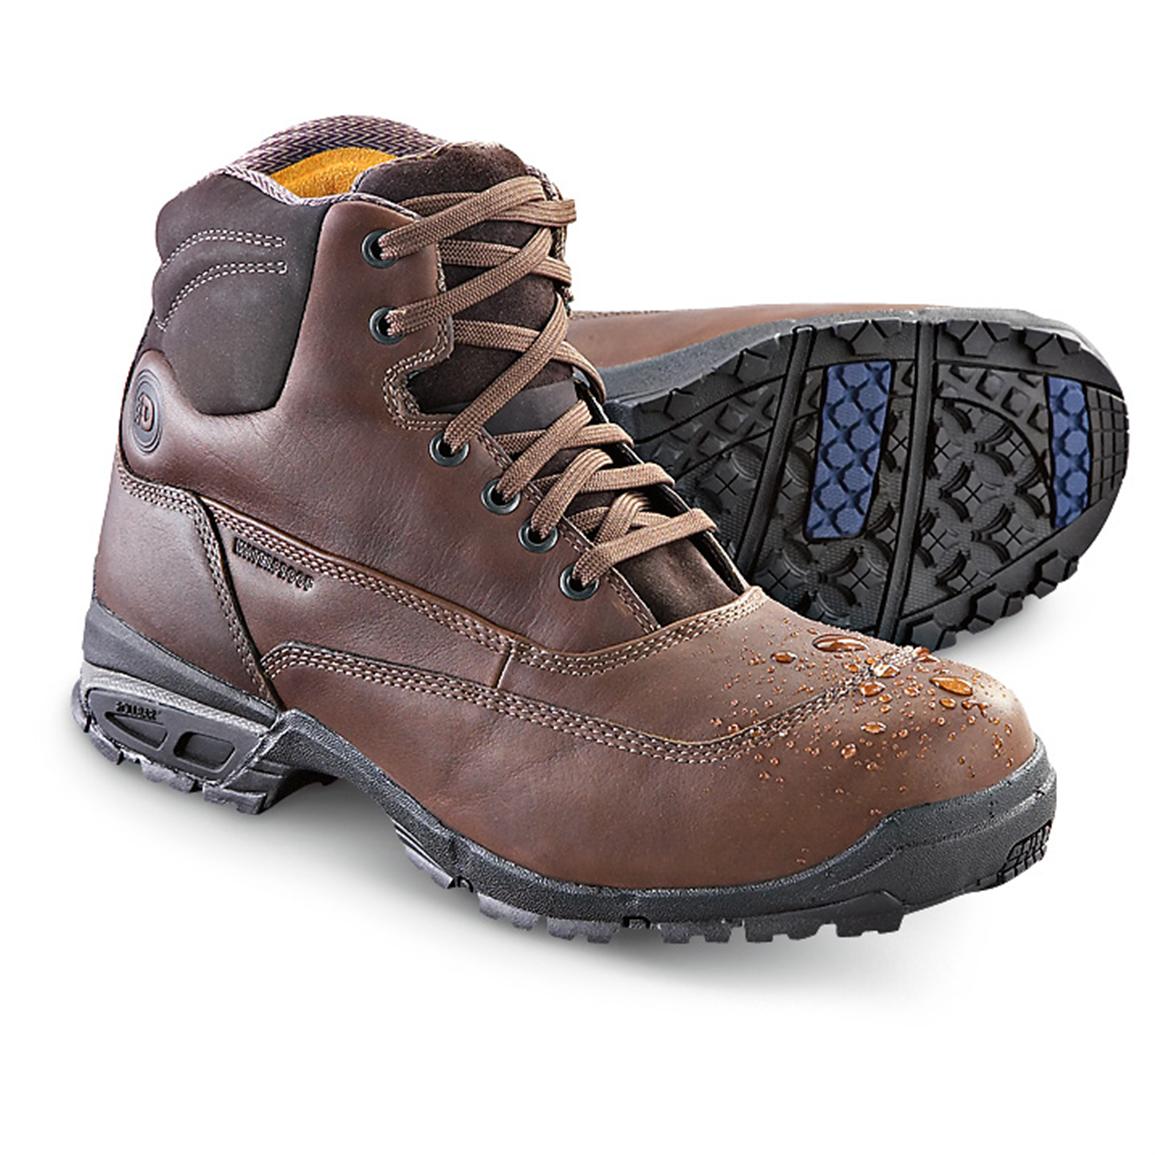 Men's Dunham® 6" Waterproof Work Boots, Brown 139434, Work Boots at Sportsman's Guide